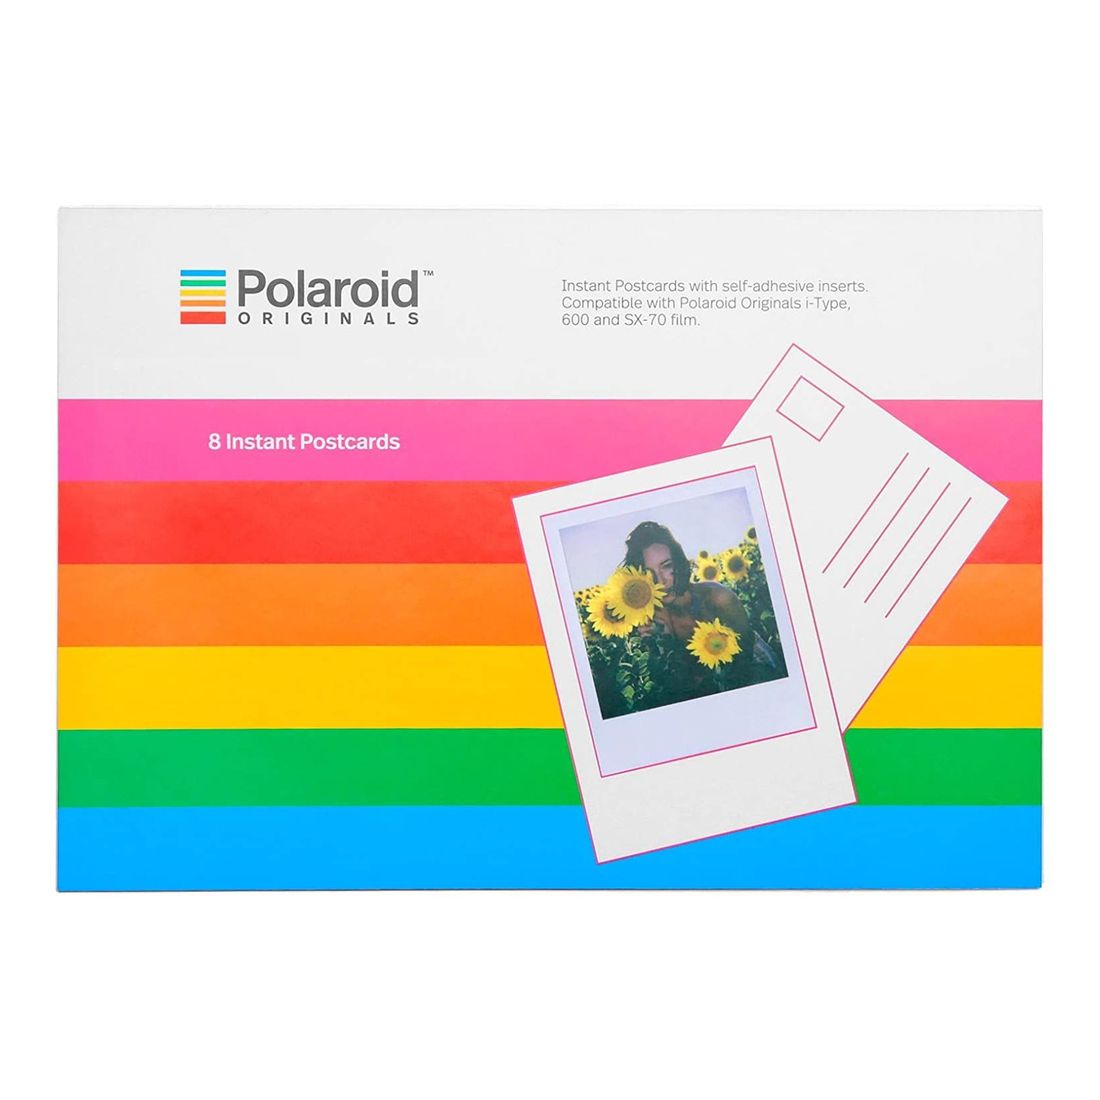 Polaroid Instant Postcards